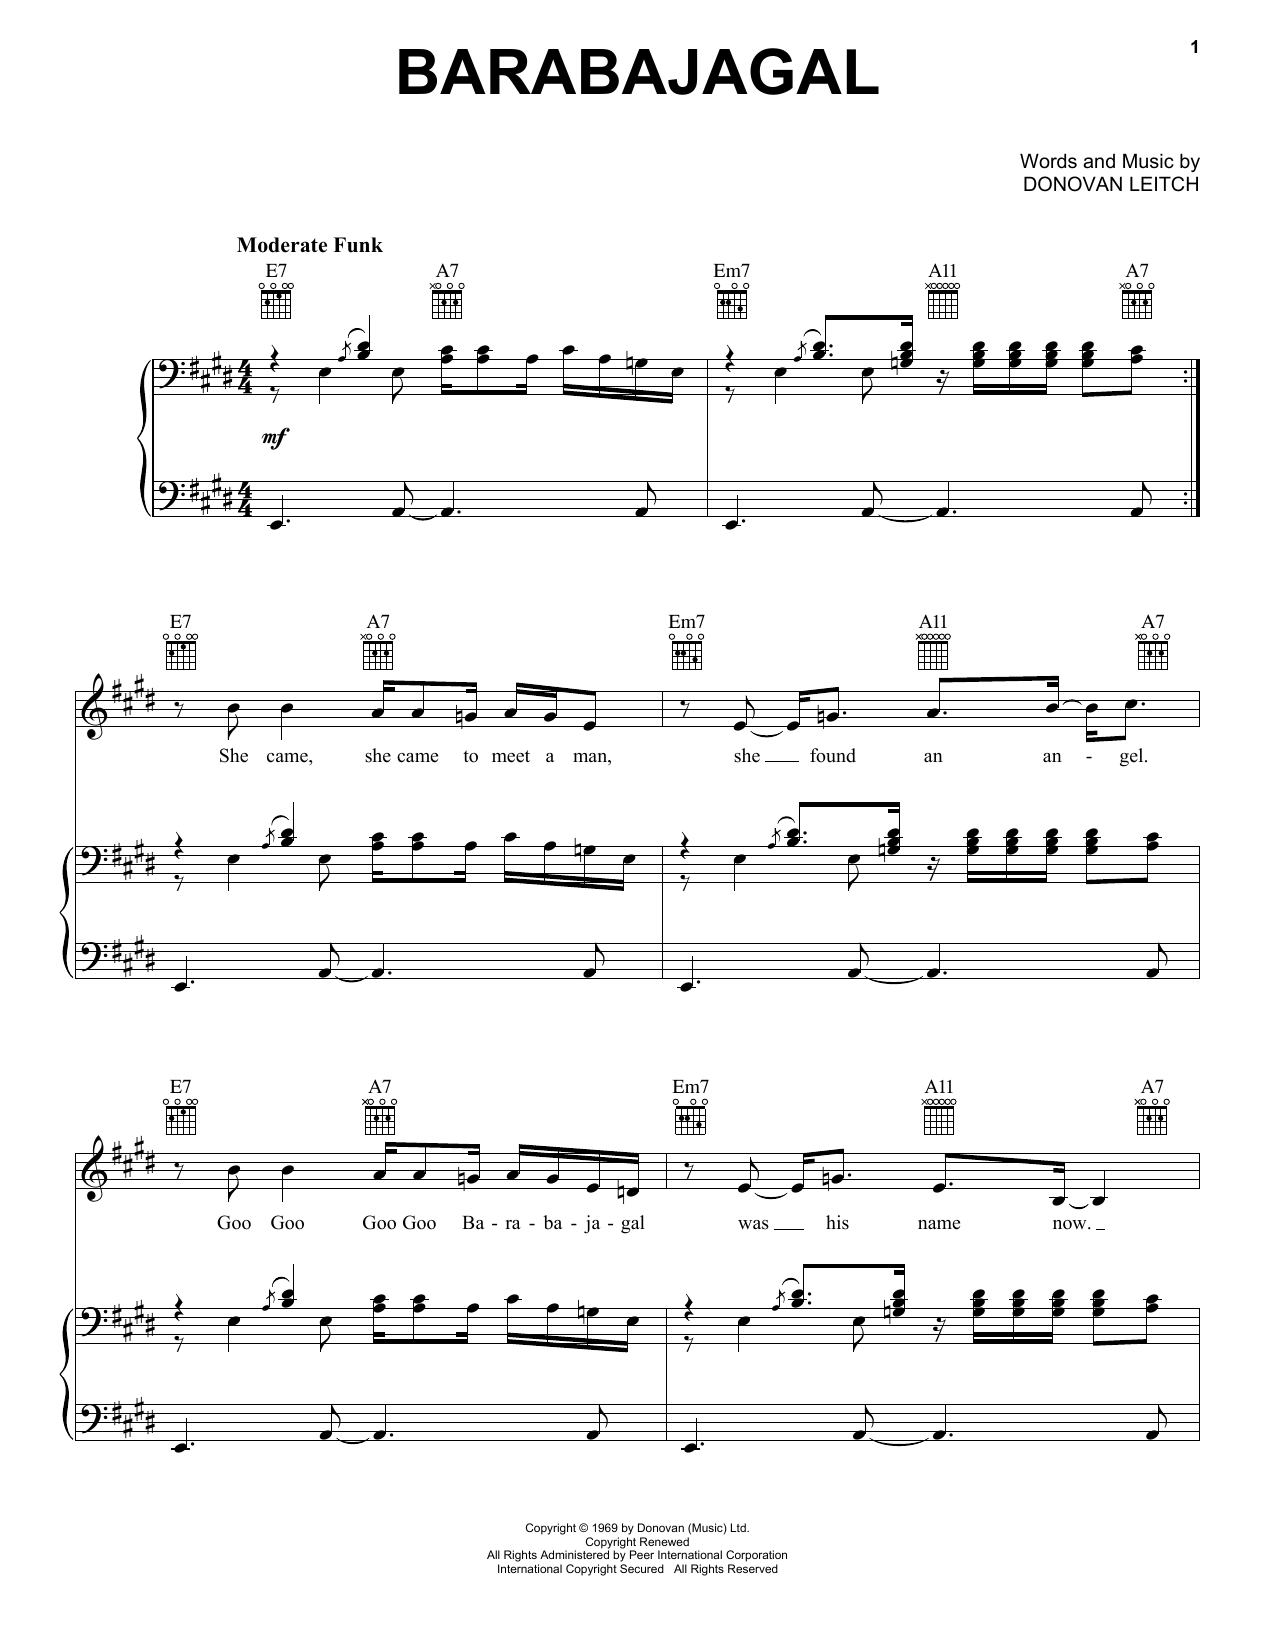 Donovan Barabajagal Sheet Music Notes & Chords for Piano, Vocal & Guitar (Right-Hand Melody) - Download or Print PDF